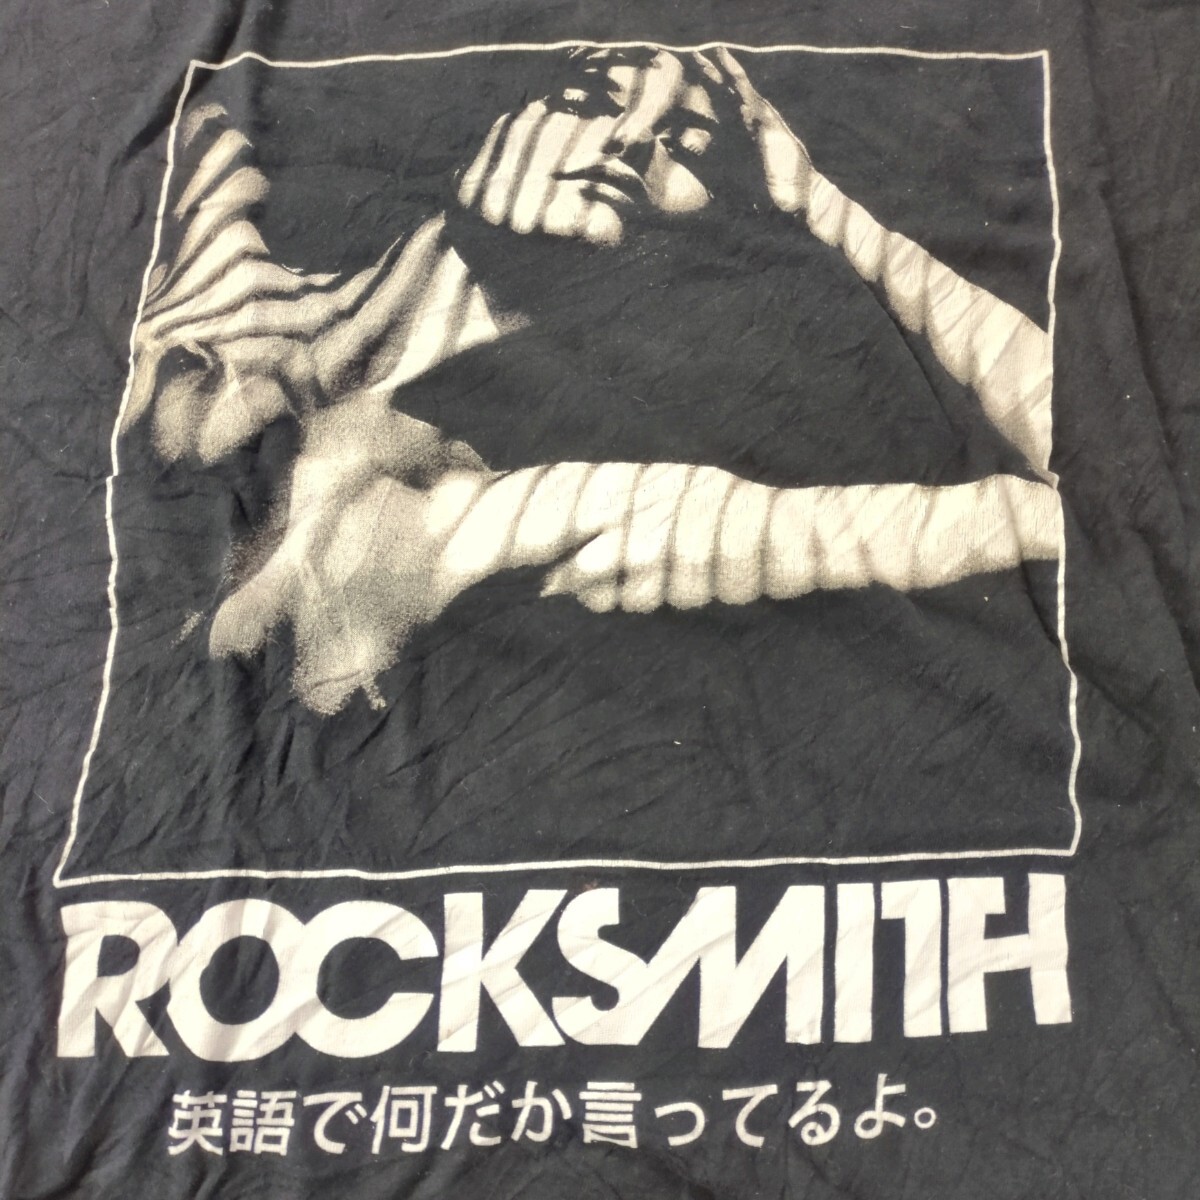 XL ROCK SMITH Tシャツ ブラック 半袖 リユース ultramto ts1592